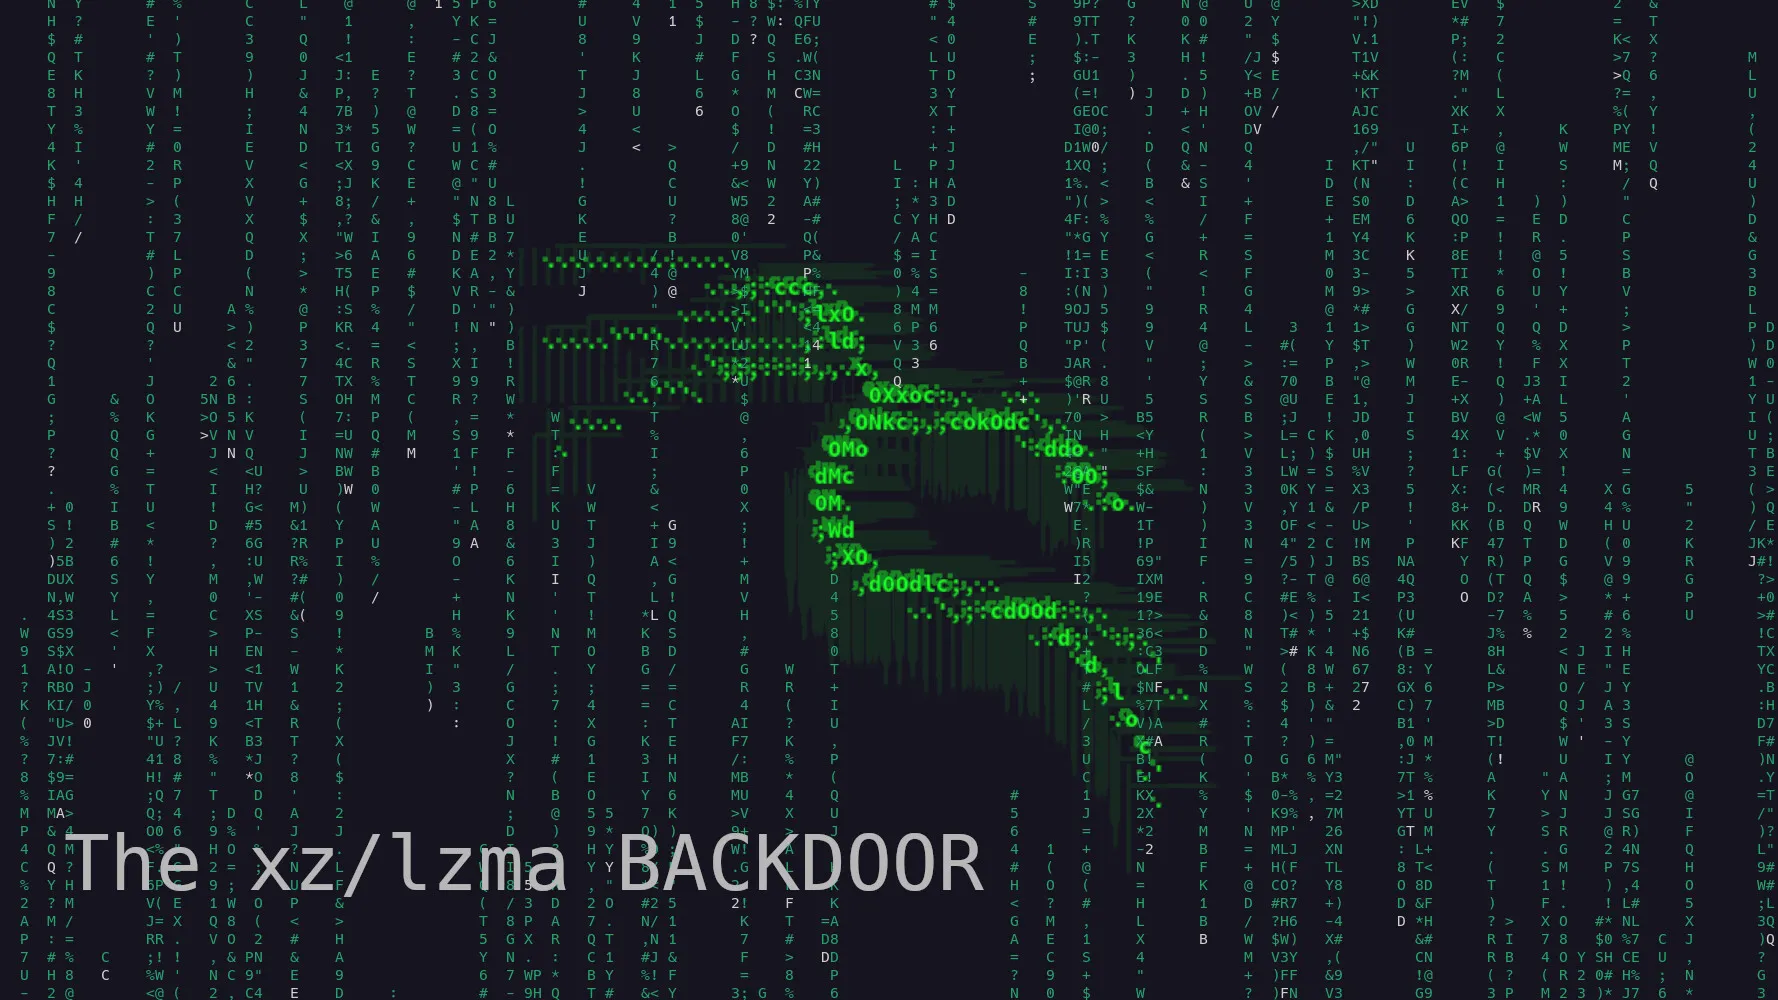 xz-utils backdoor: how to get started | Kali Linux Blog